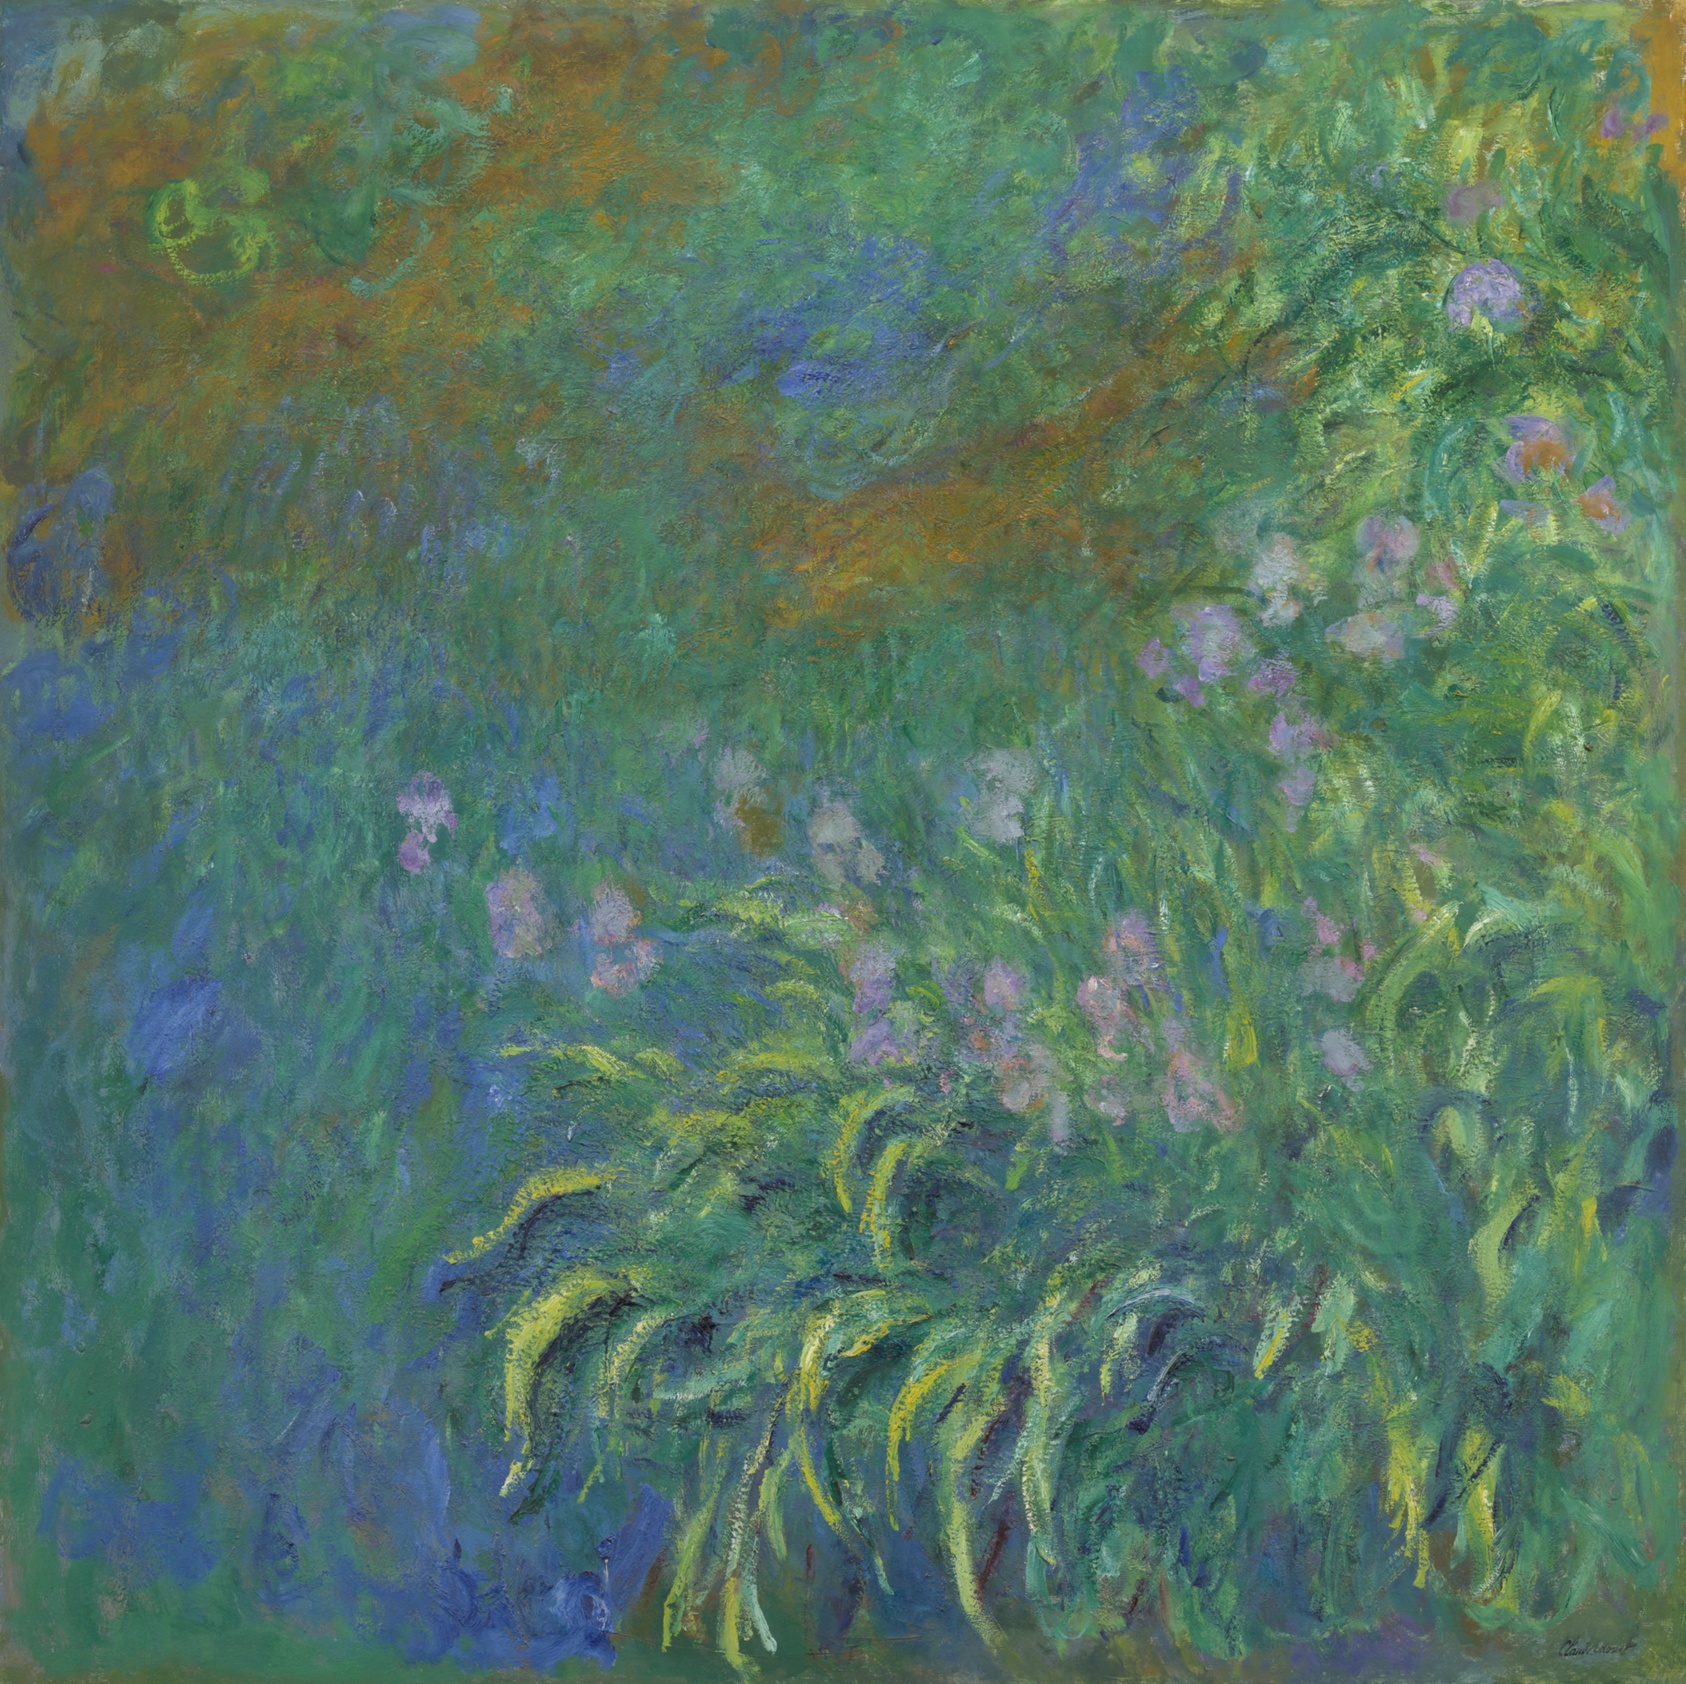 Irises by Claude Monet